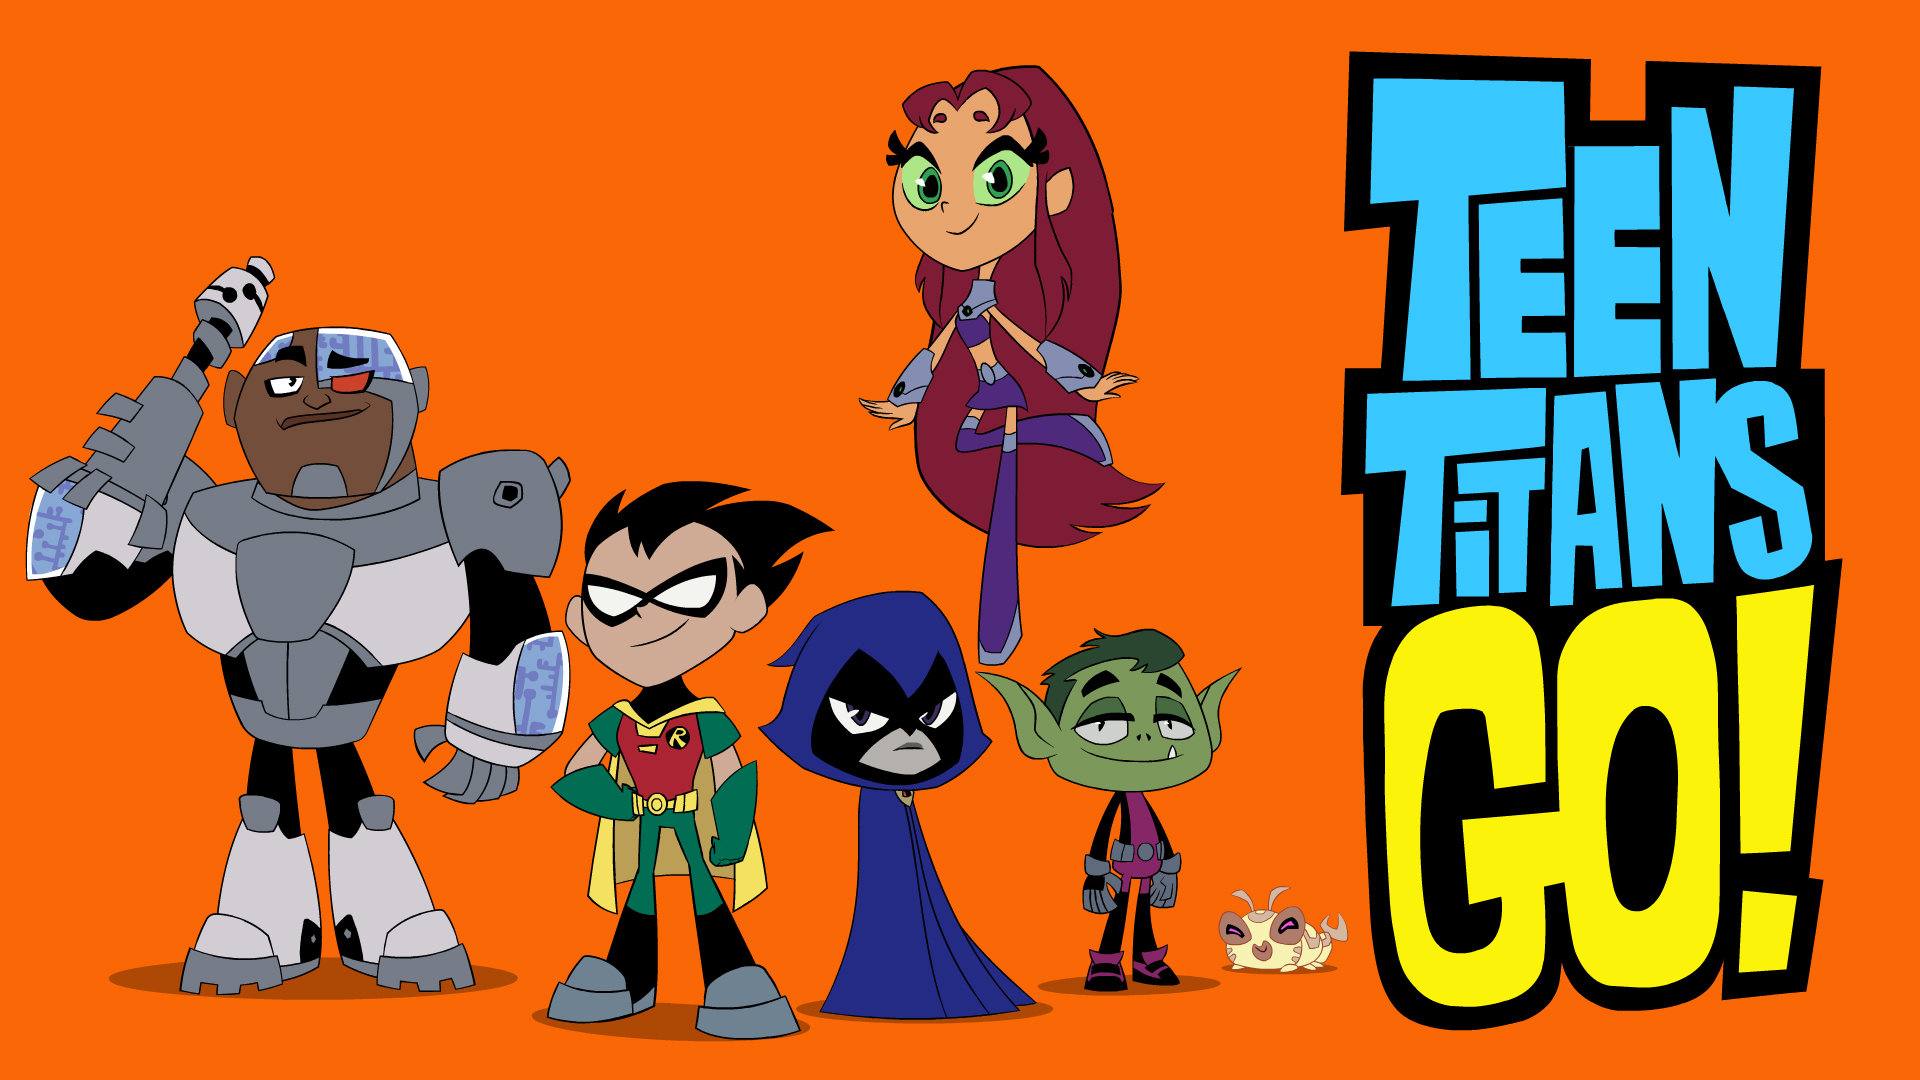 Best Teen Titans Go! wallpaper ID:237649 for High Resolution full hd 1080p desktop